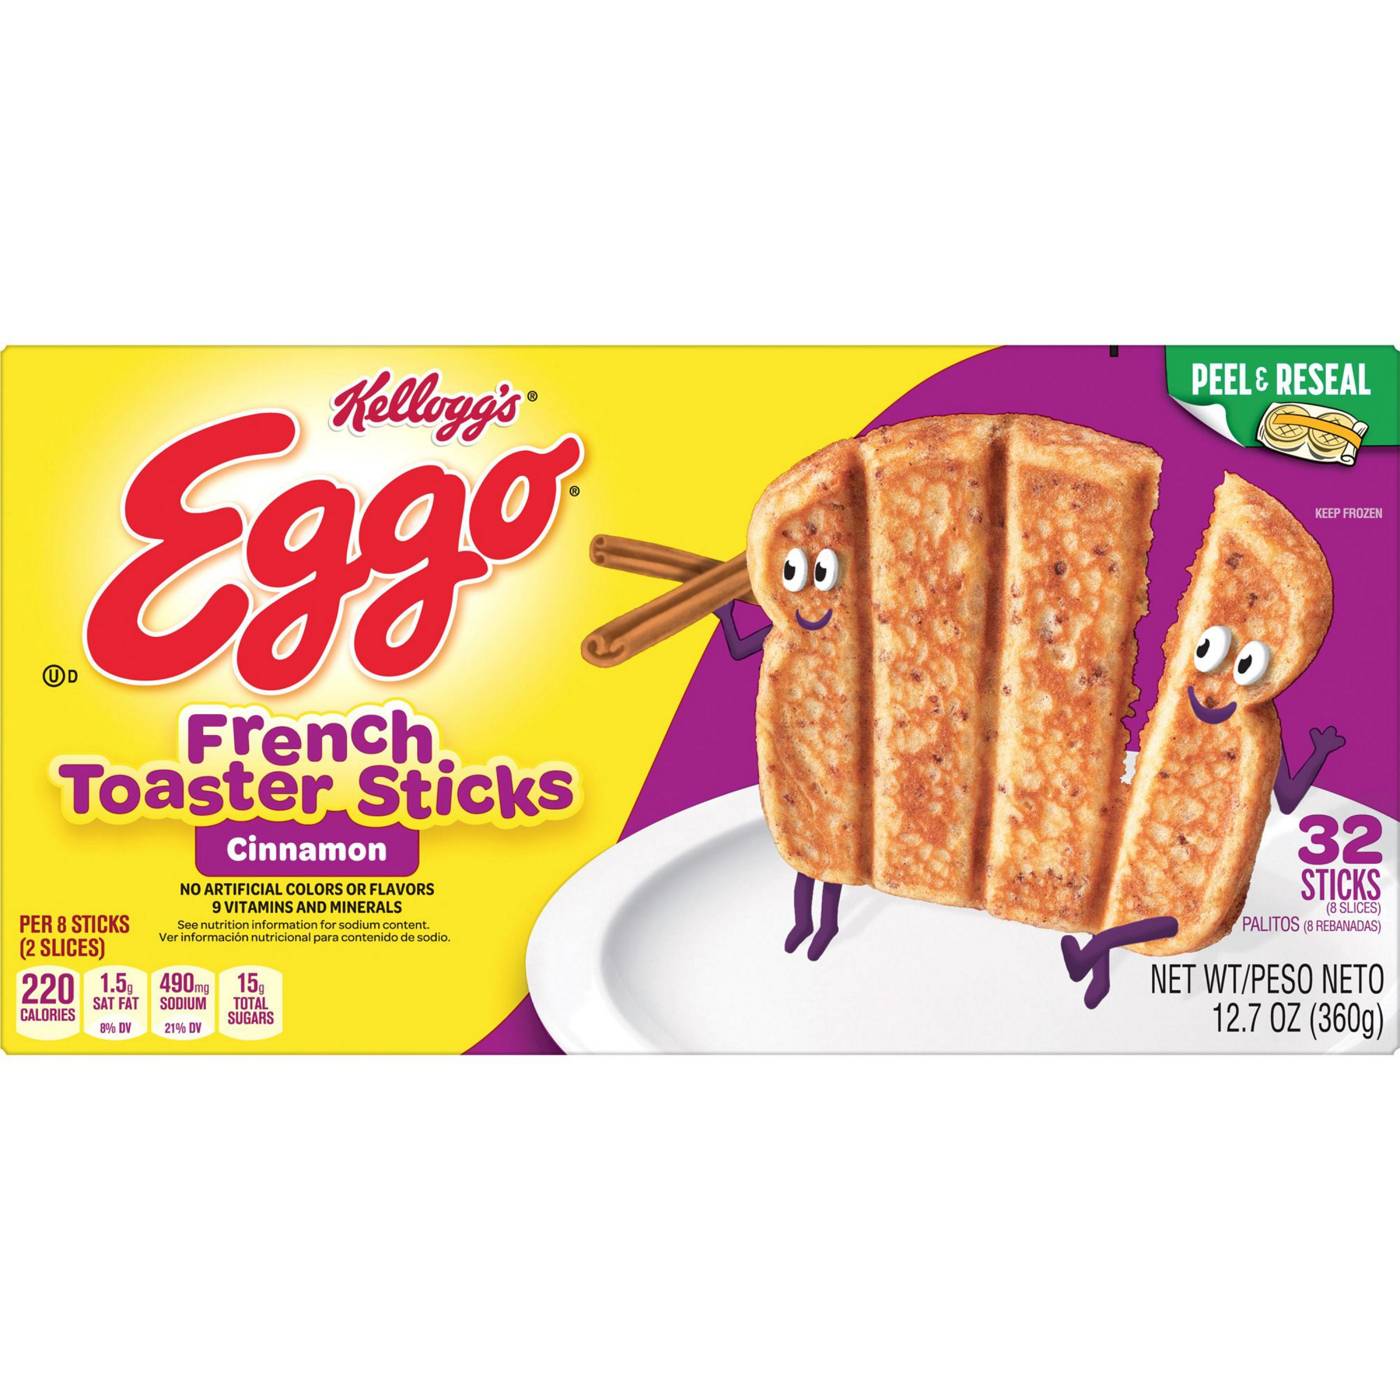 Eggo Cinnamon Frozen French Toast Sticks; image 5 of 5